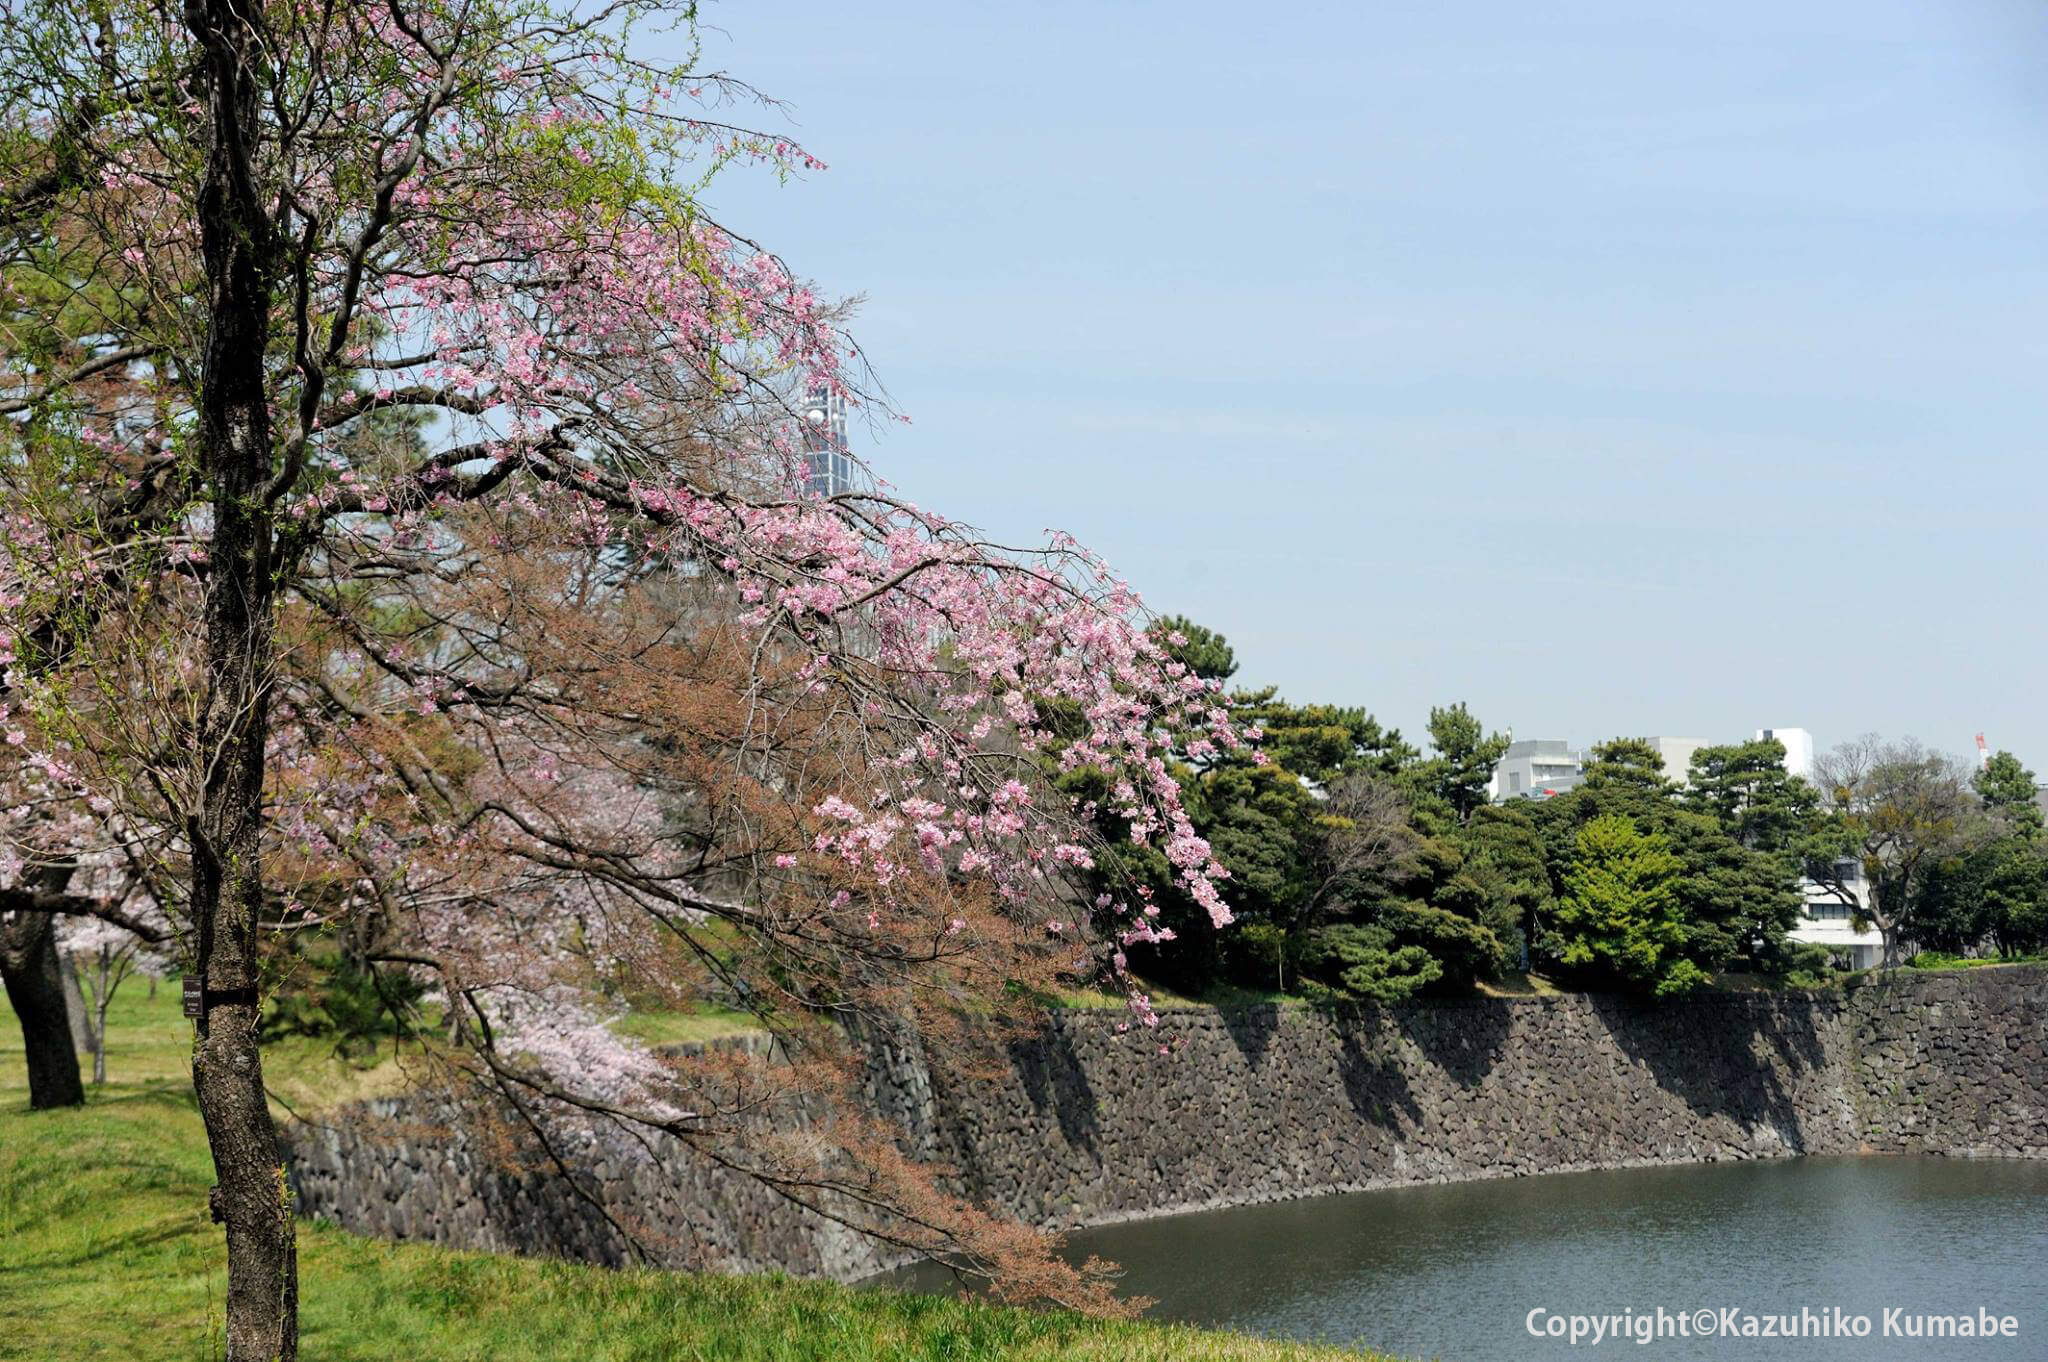 Photo of Chidori-ga-fuchi, beautiful cherry blossoms reflected in the water